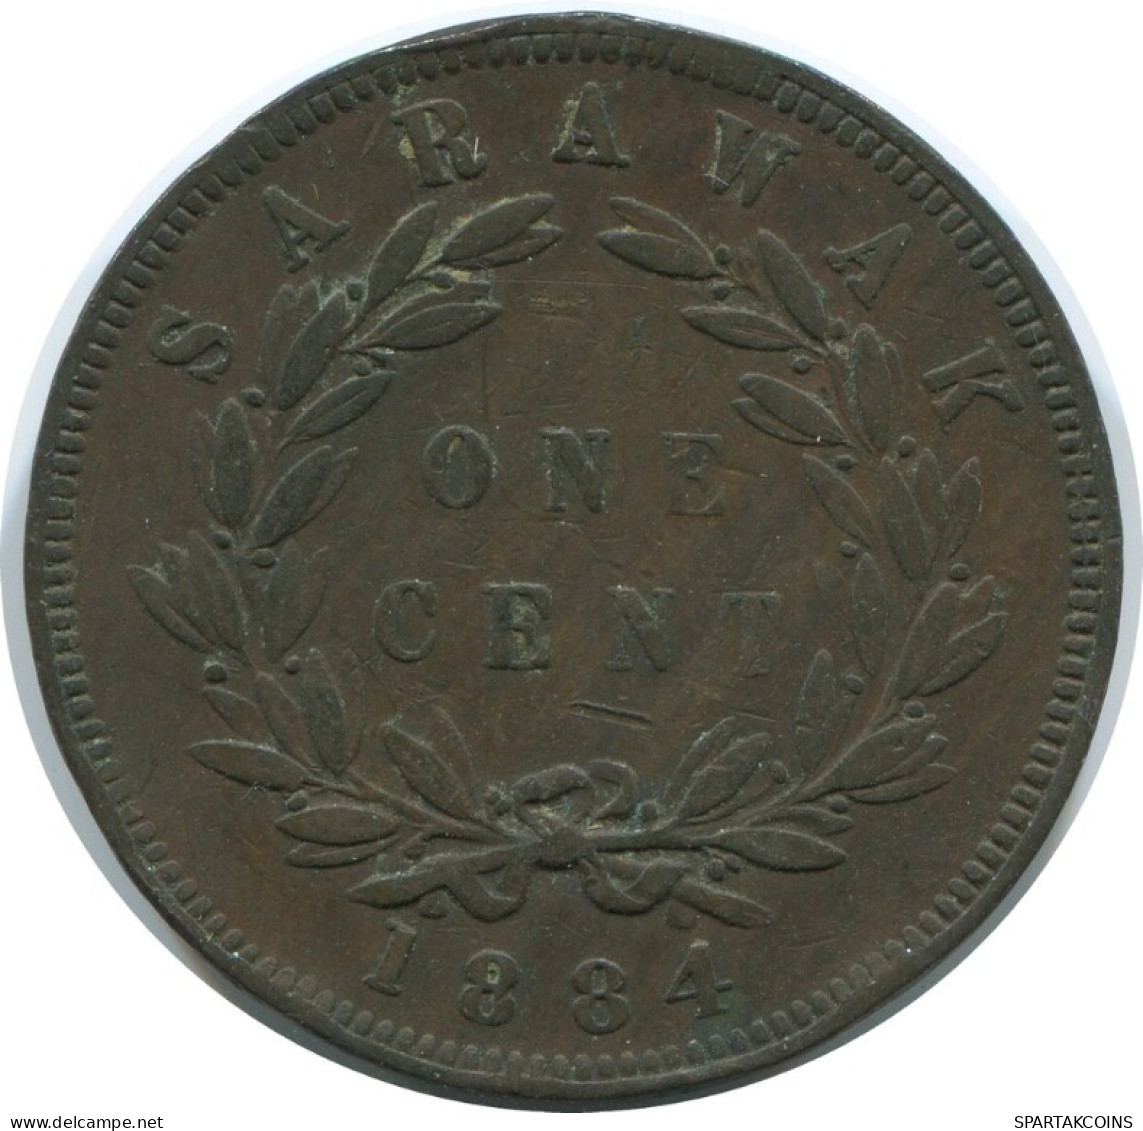 1 CENT 1884 SARAWAK MALASIA MALAYSIA Moneda #AE789.16.E.A - Malaysie